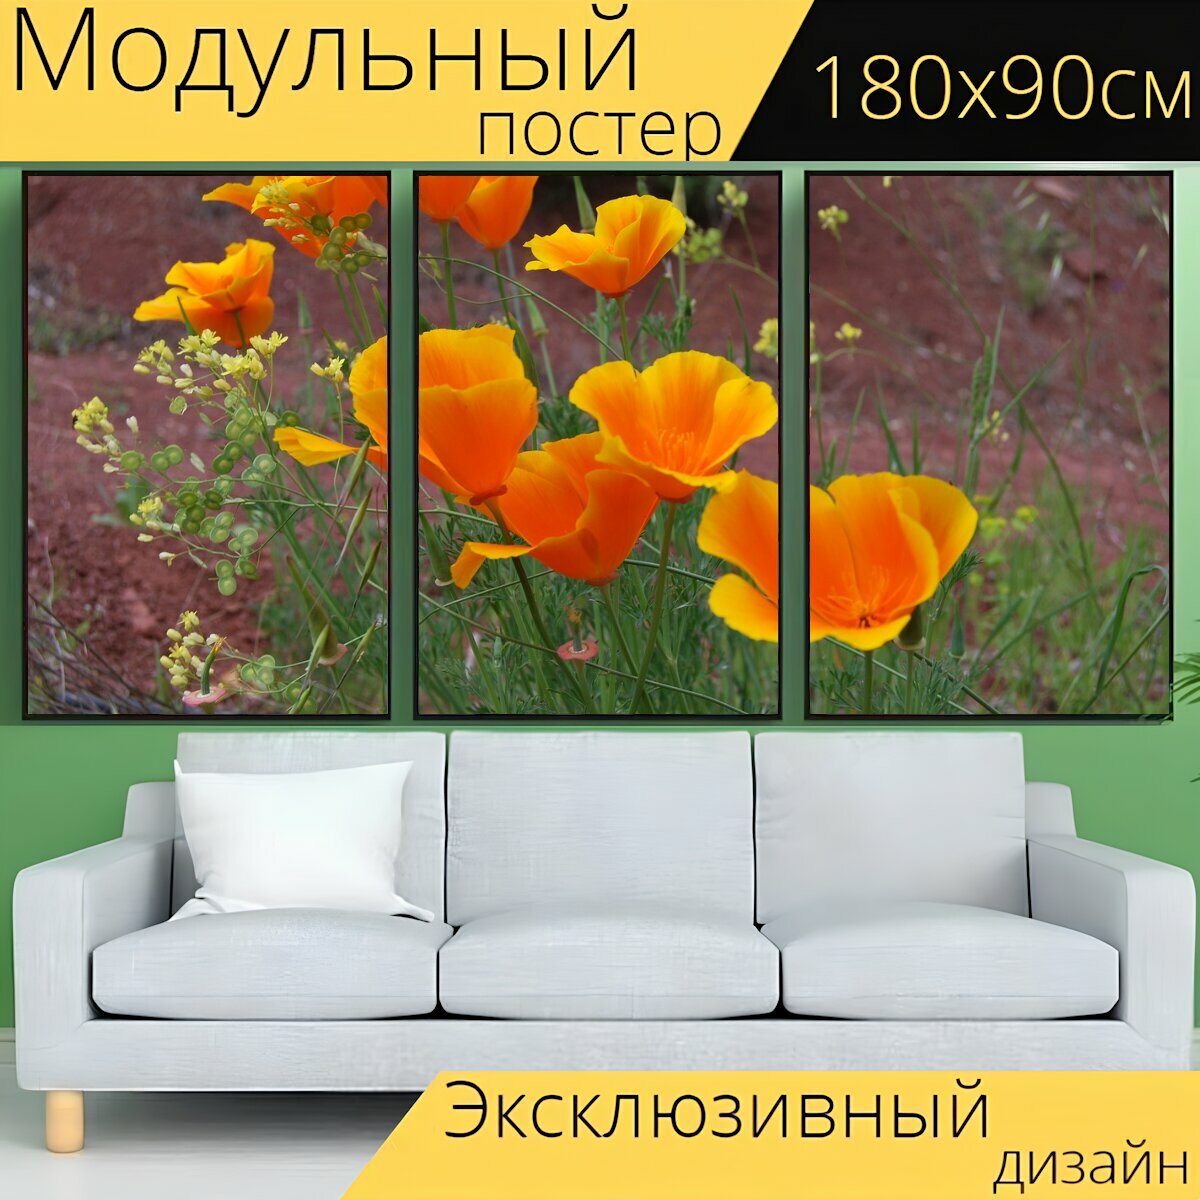 Модульный постер "Желтый, апельсин, цветок" 180 x 90 см. для интерьера